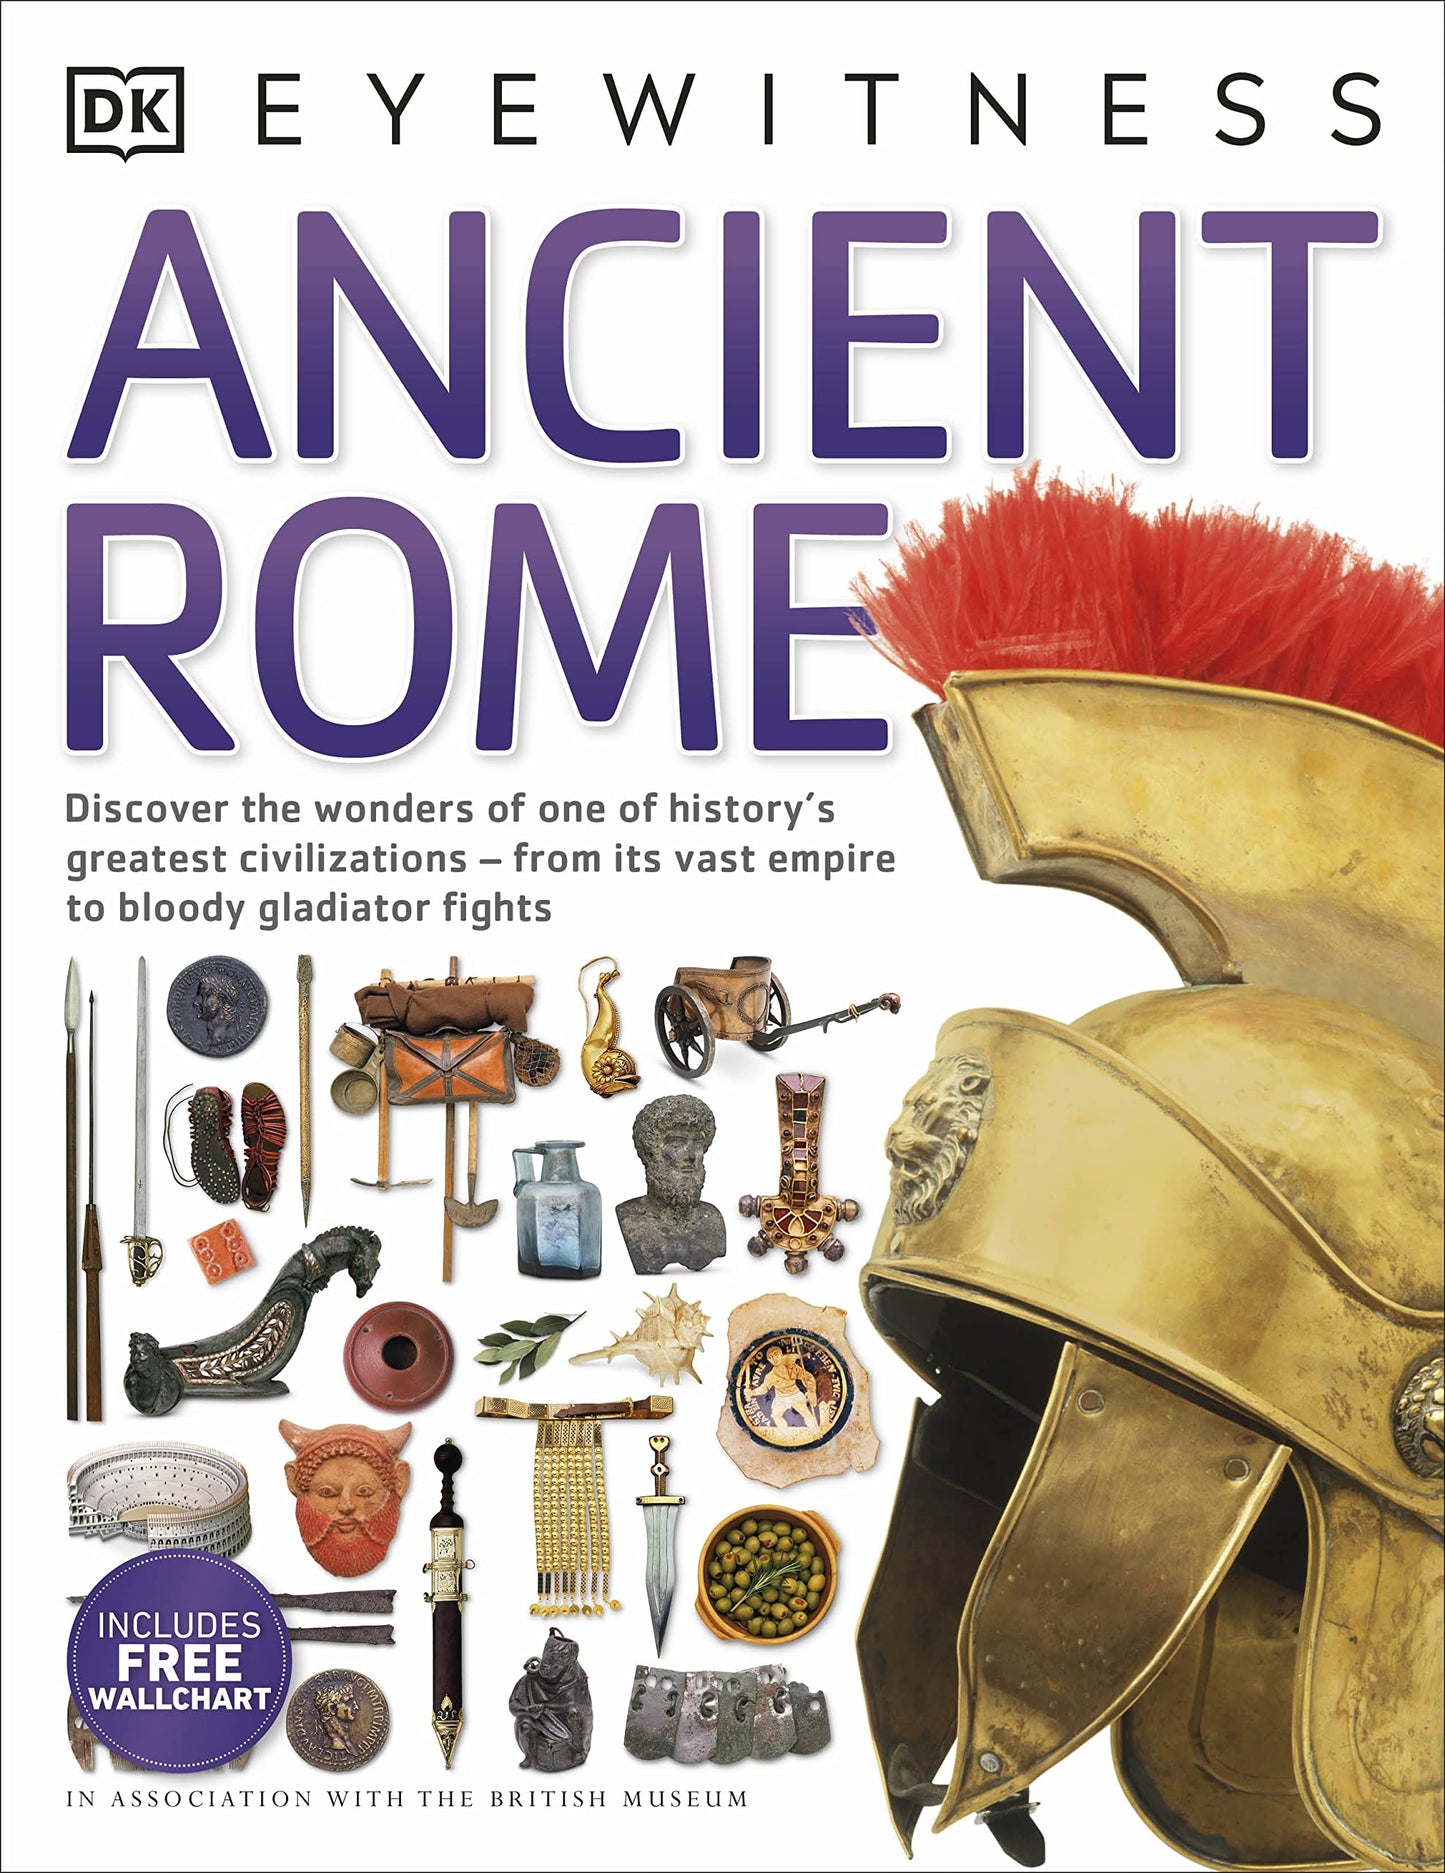 DK Eyewitness Ancient Rome